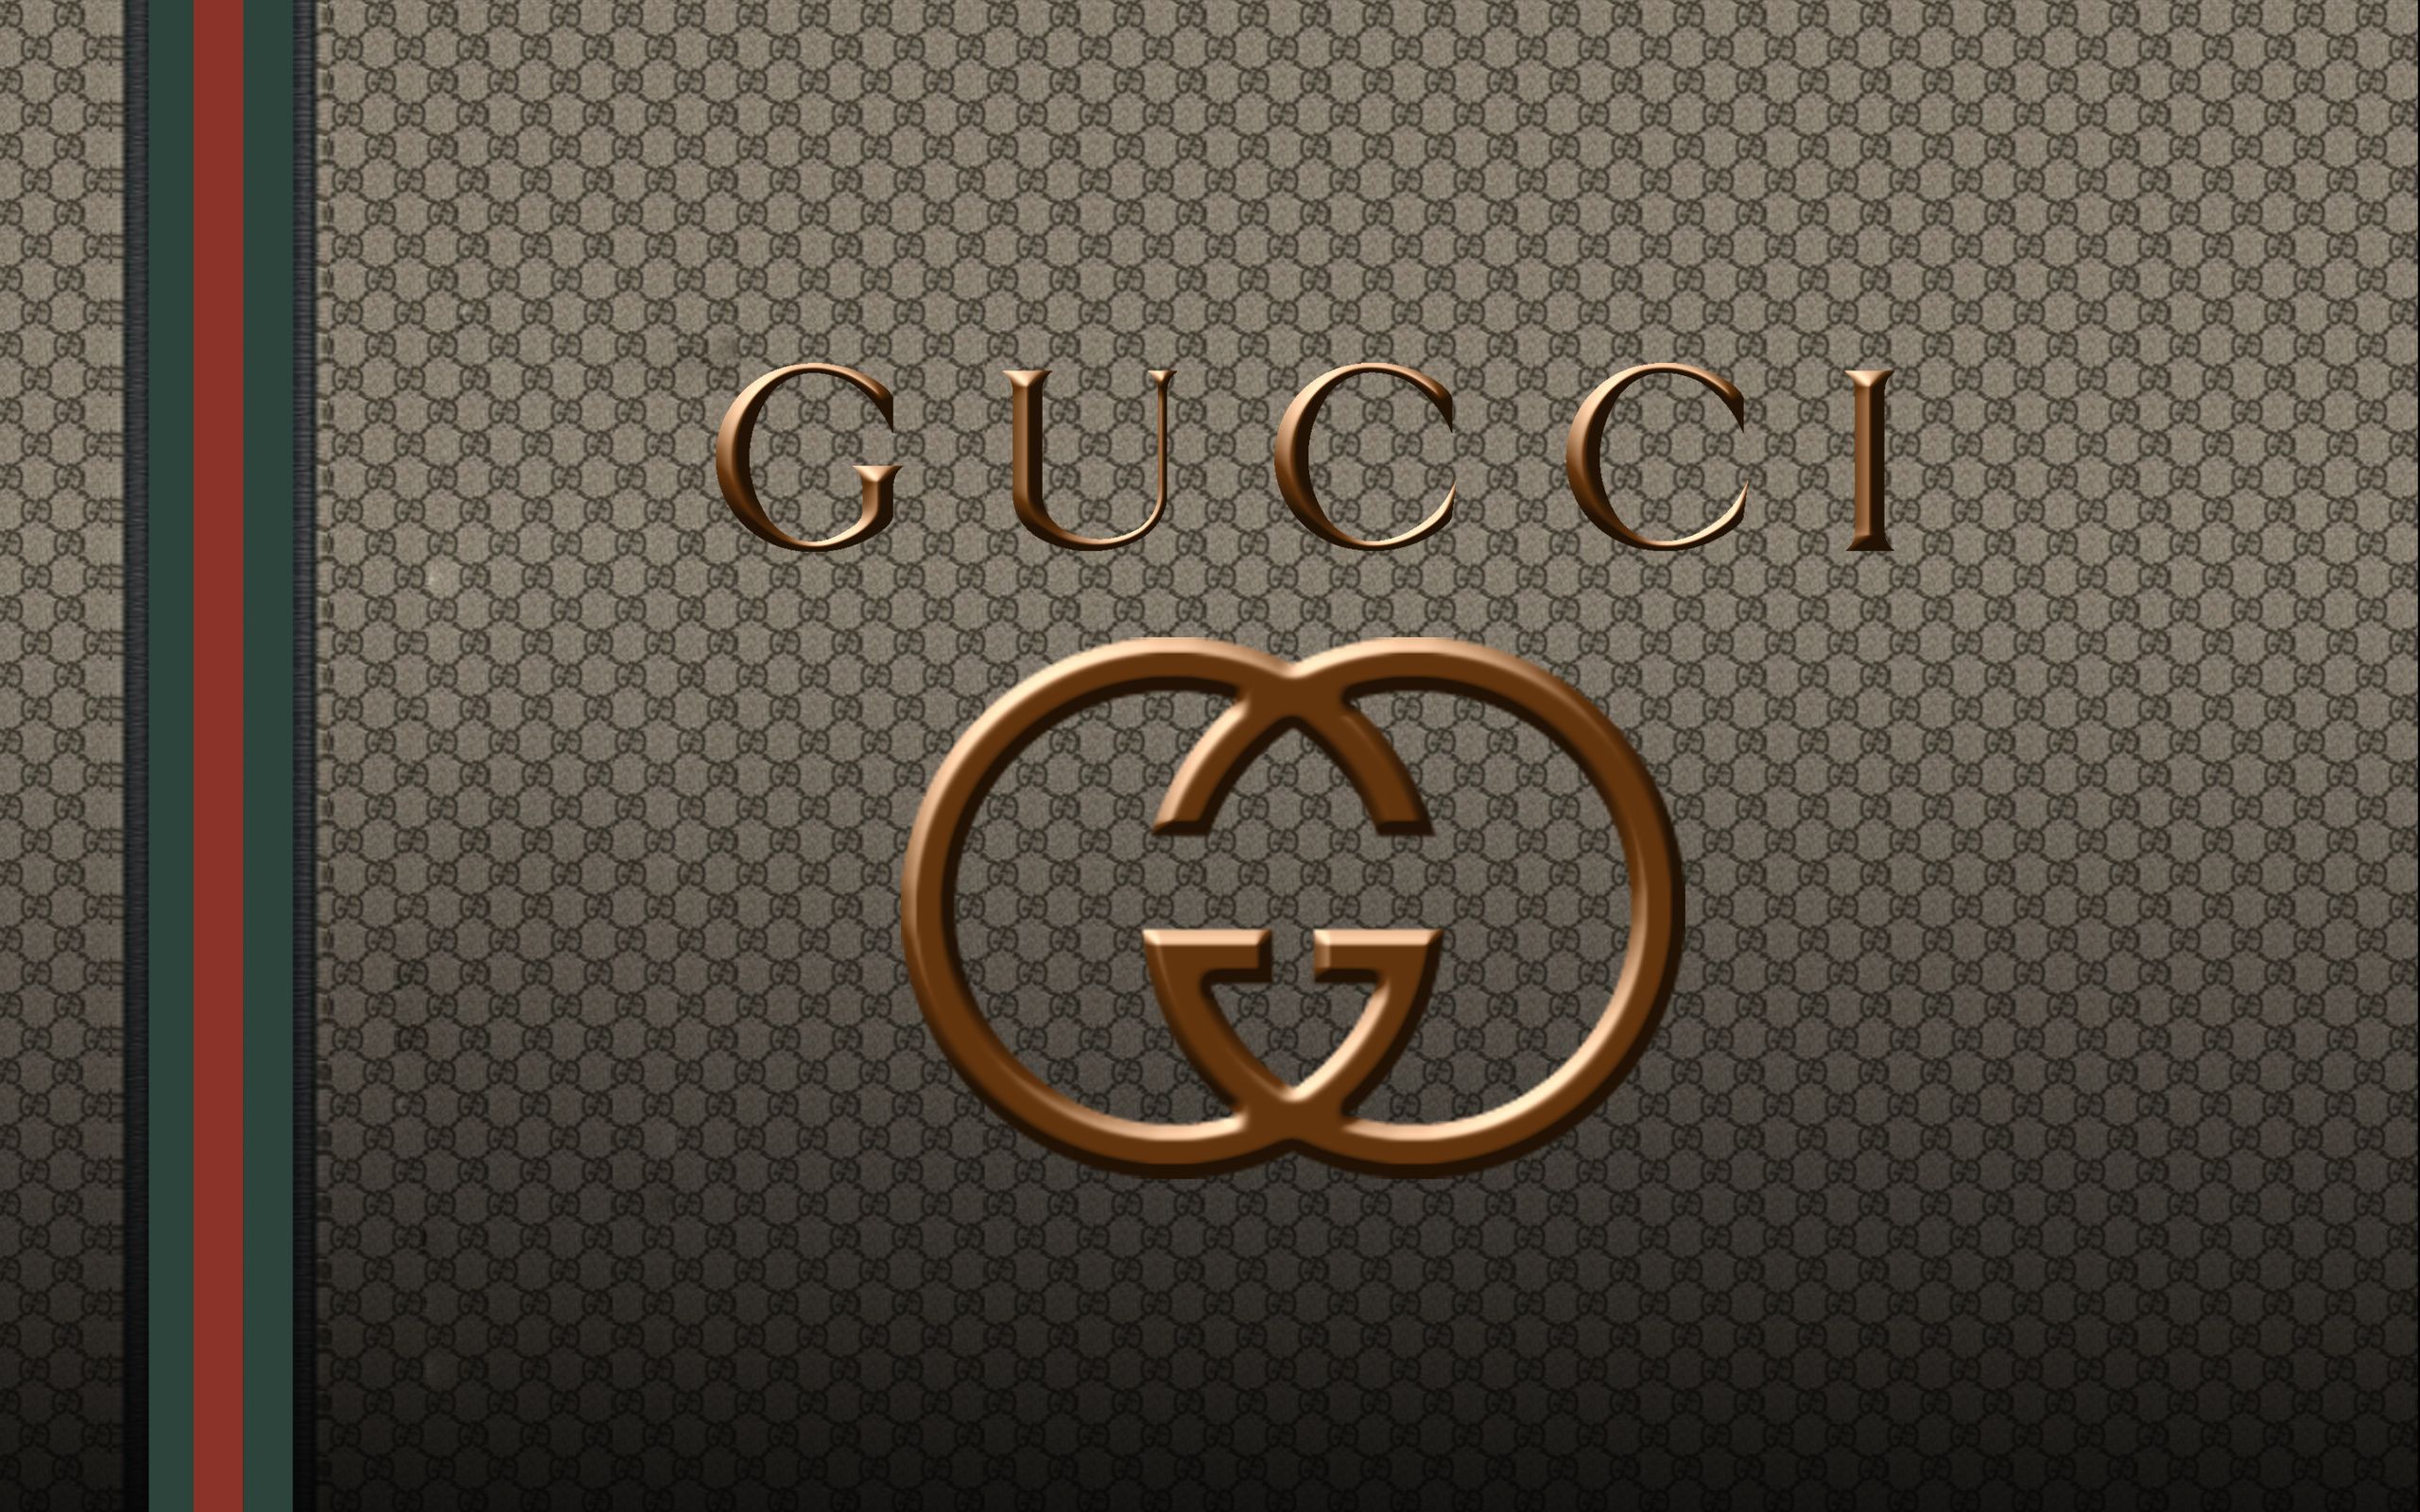 Man Made Gucci Wallpaper